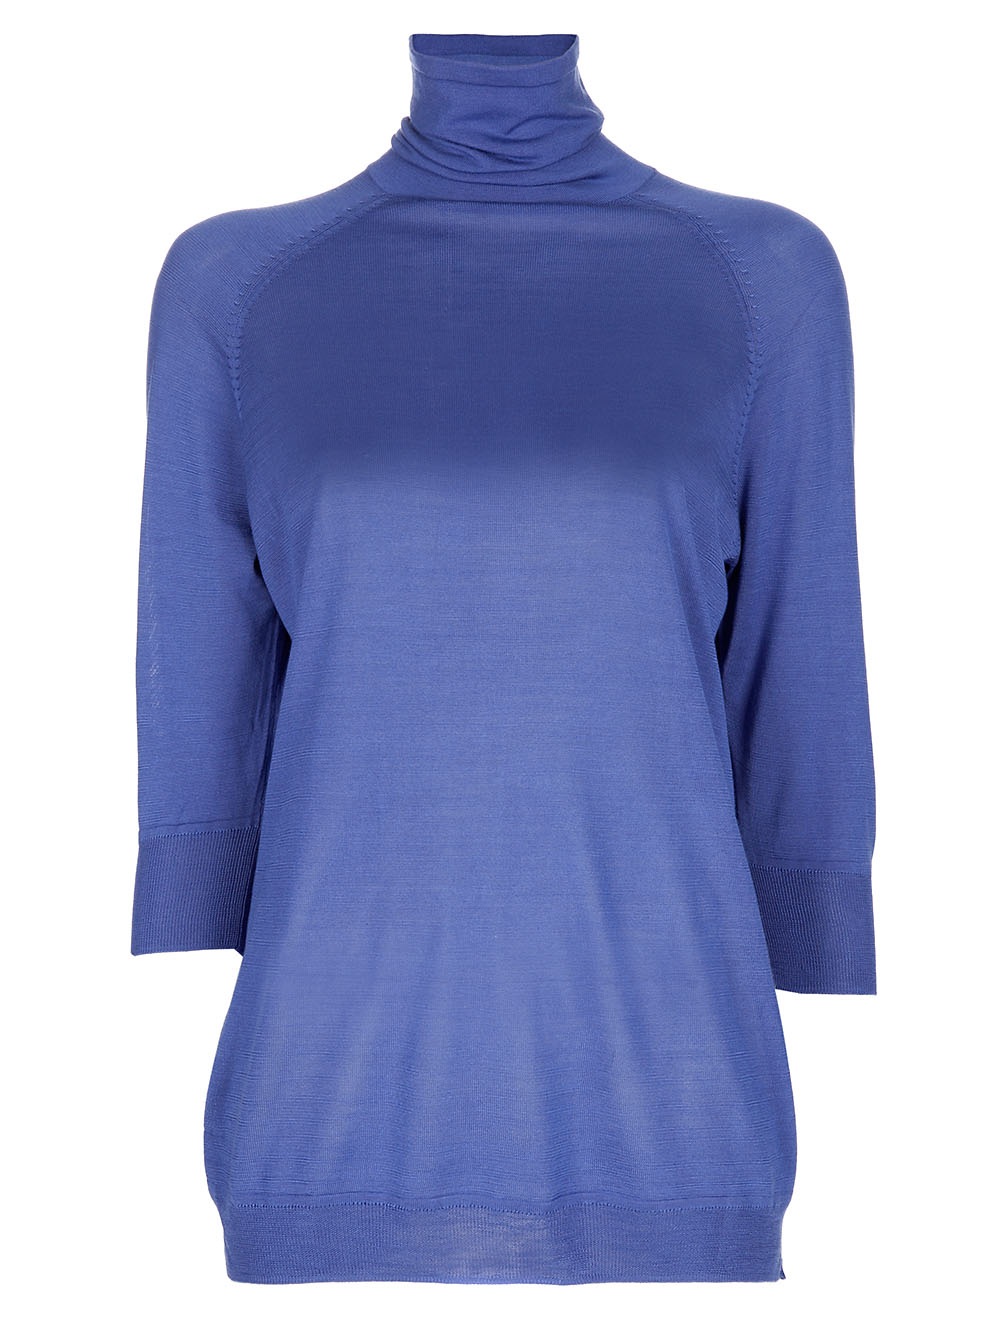 Acne Studios Emin Backless Sweater in Blue | Lyst